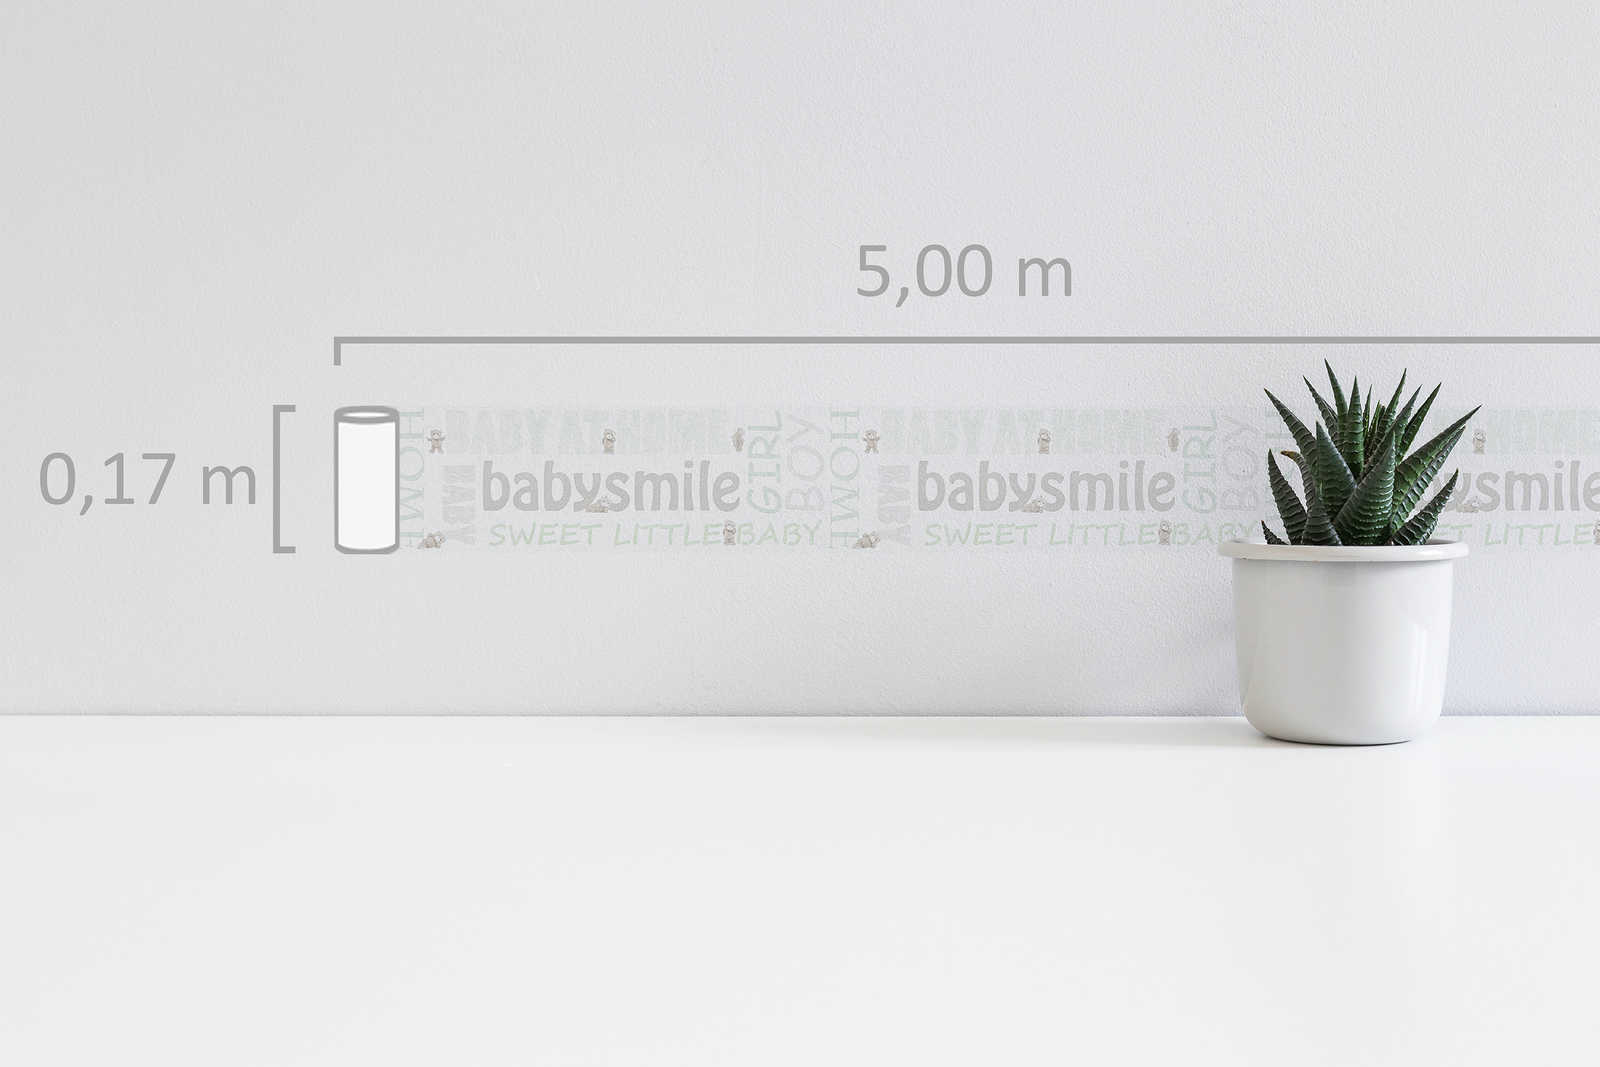             Wallpaper border baby motif for Nursery - metallic, white
        